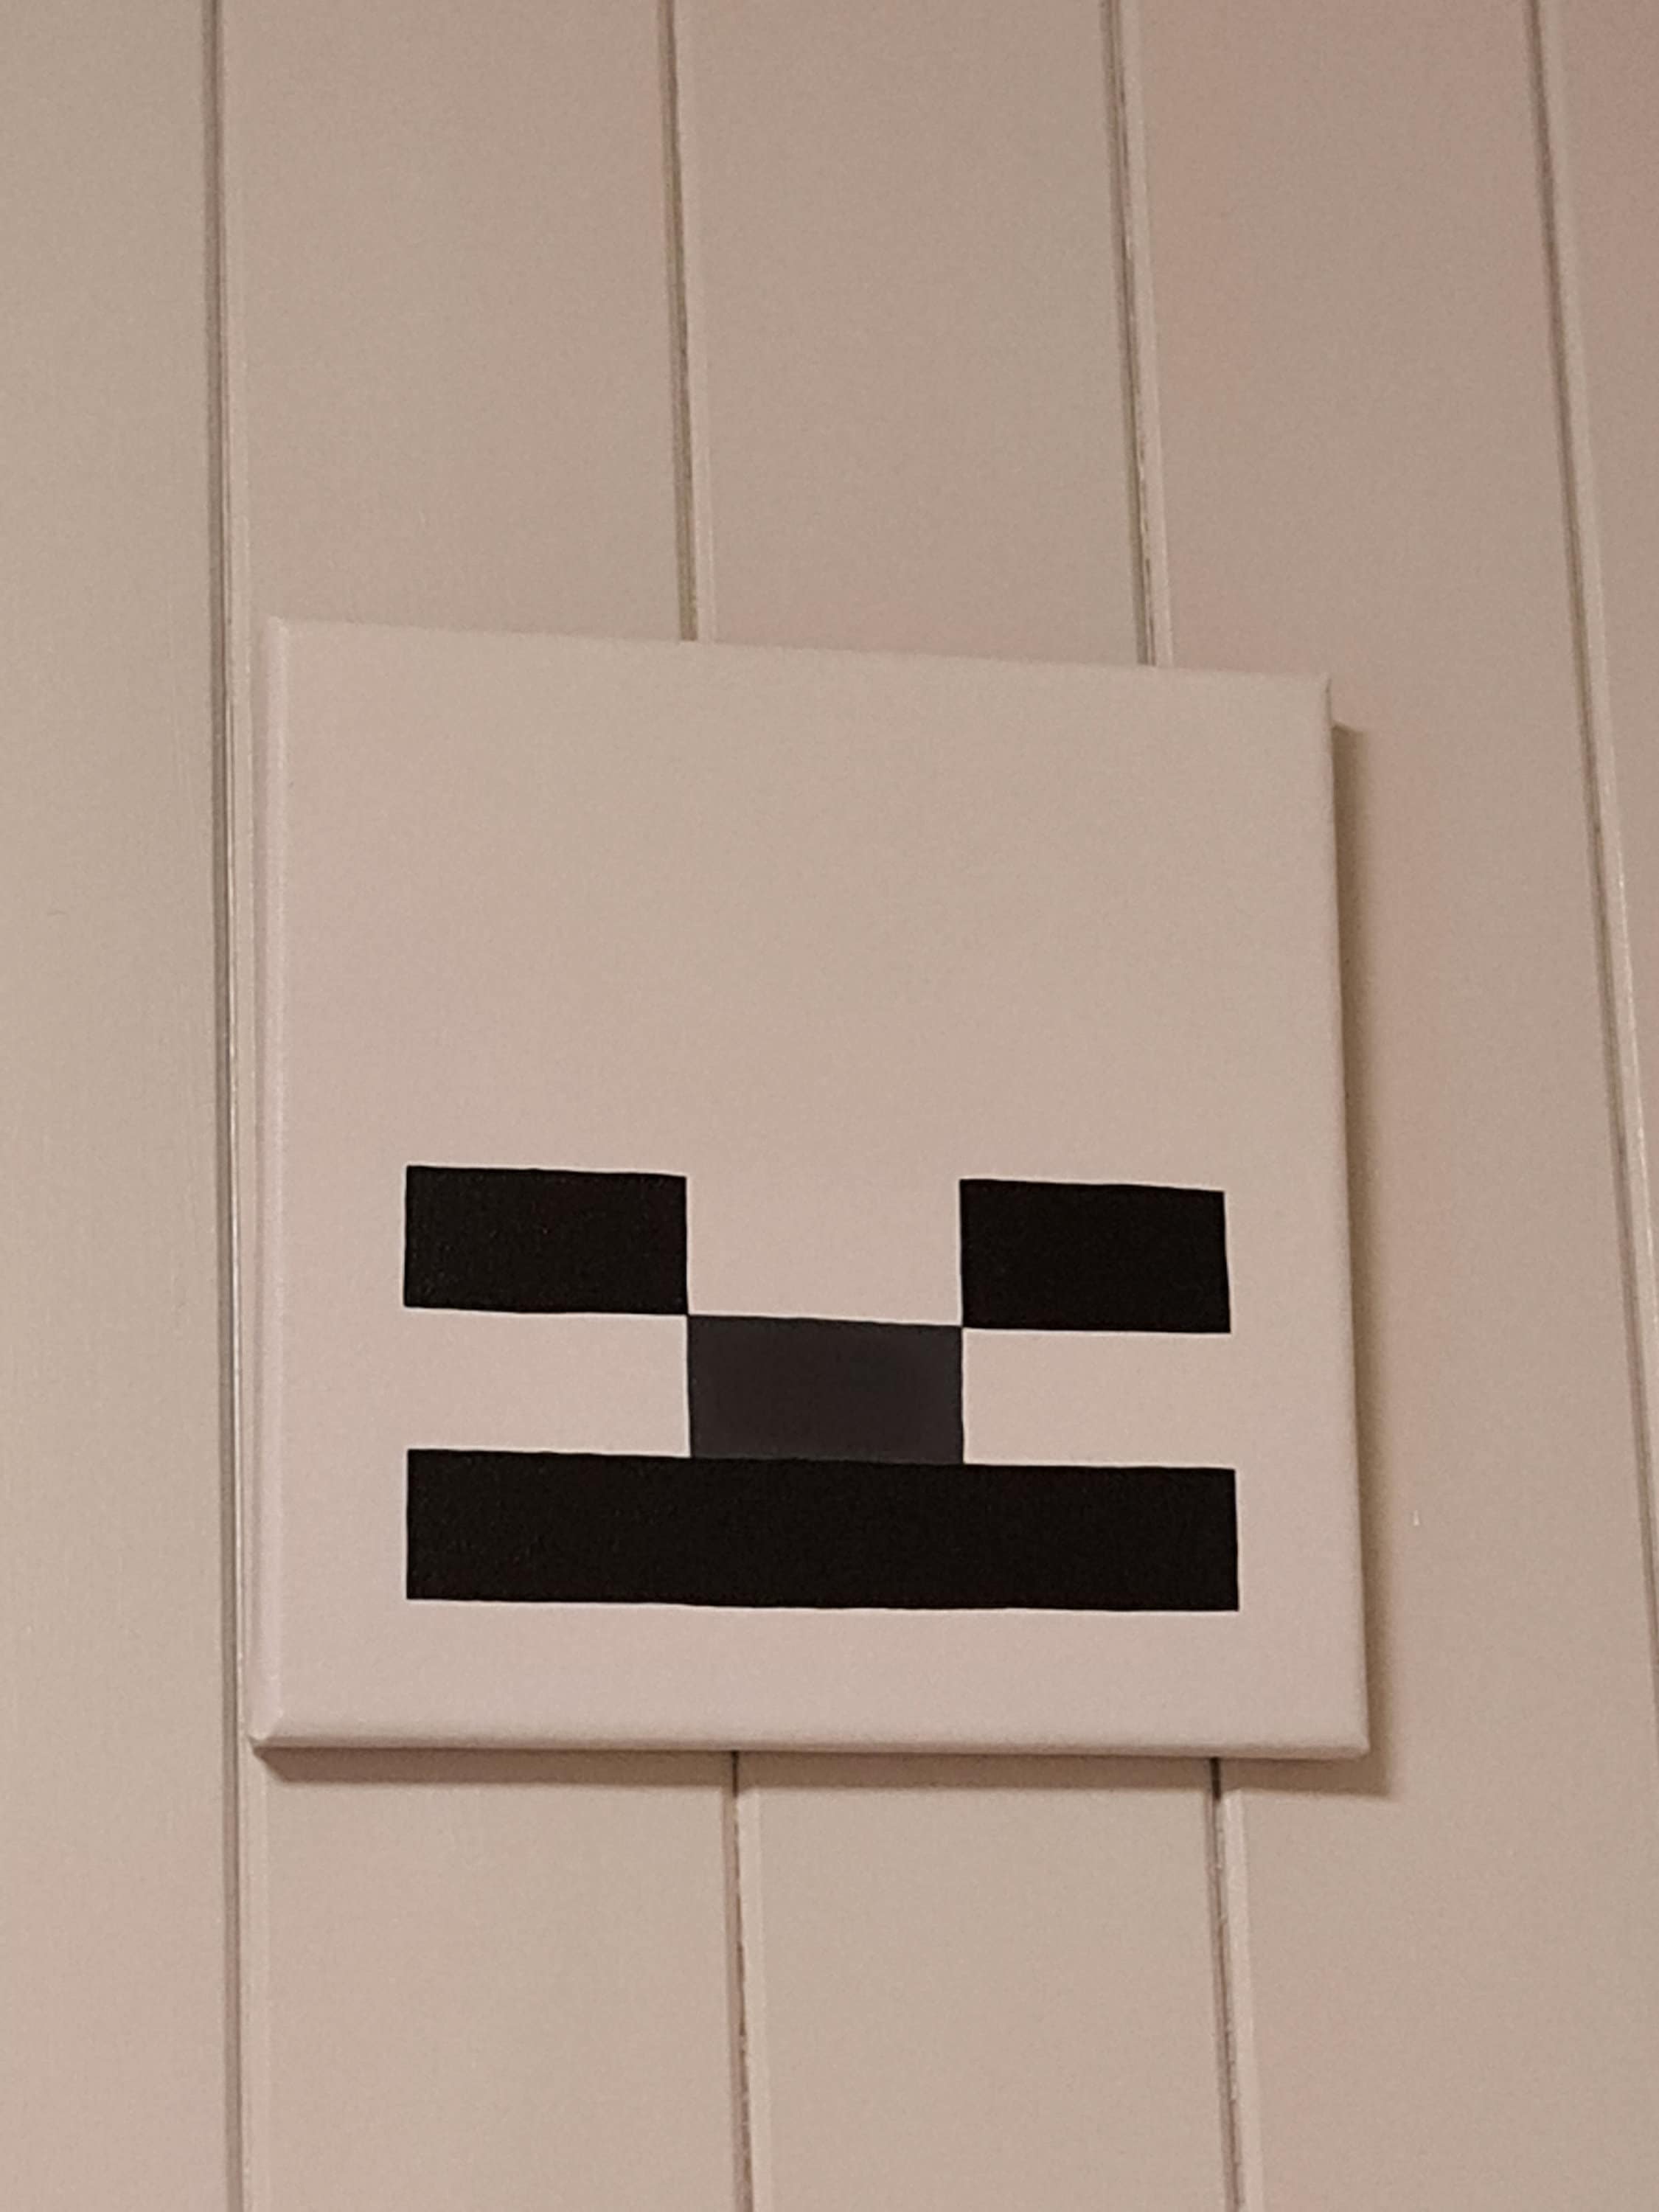 Minecraft Inspired Wall Canvas Set - Pixel-Perfect Designs, Premium Ca